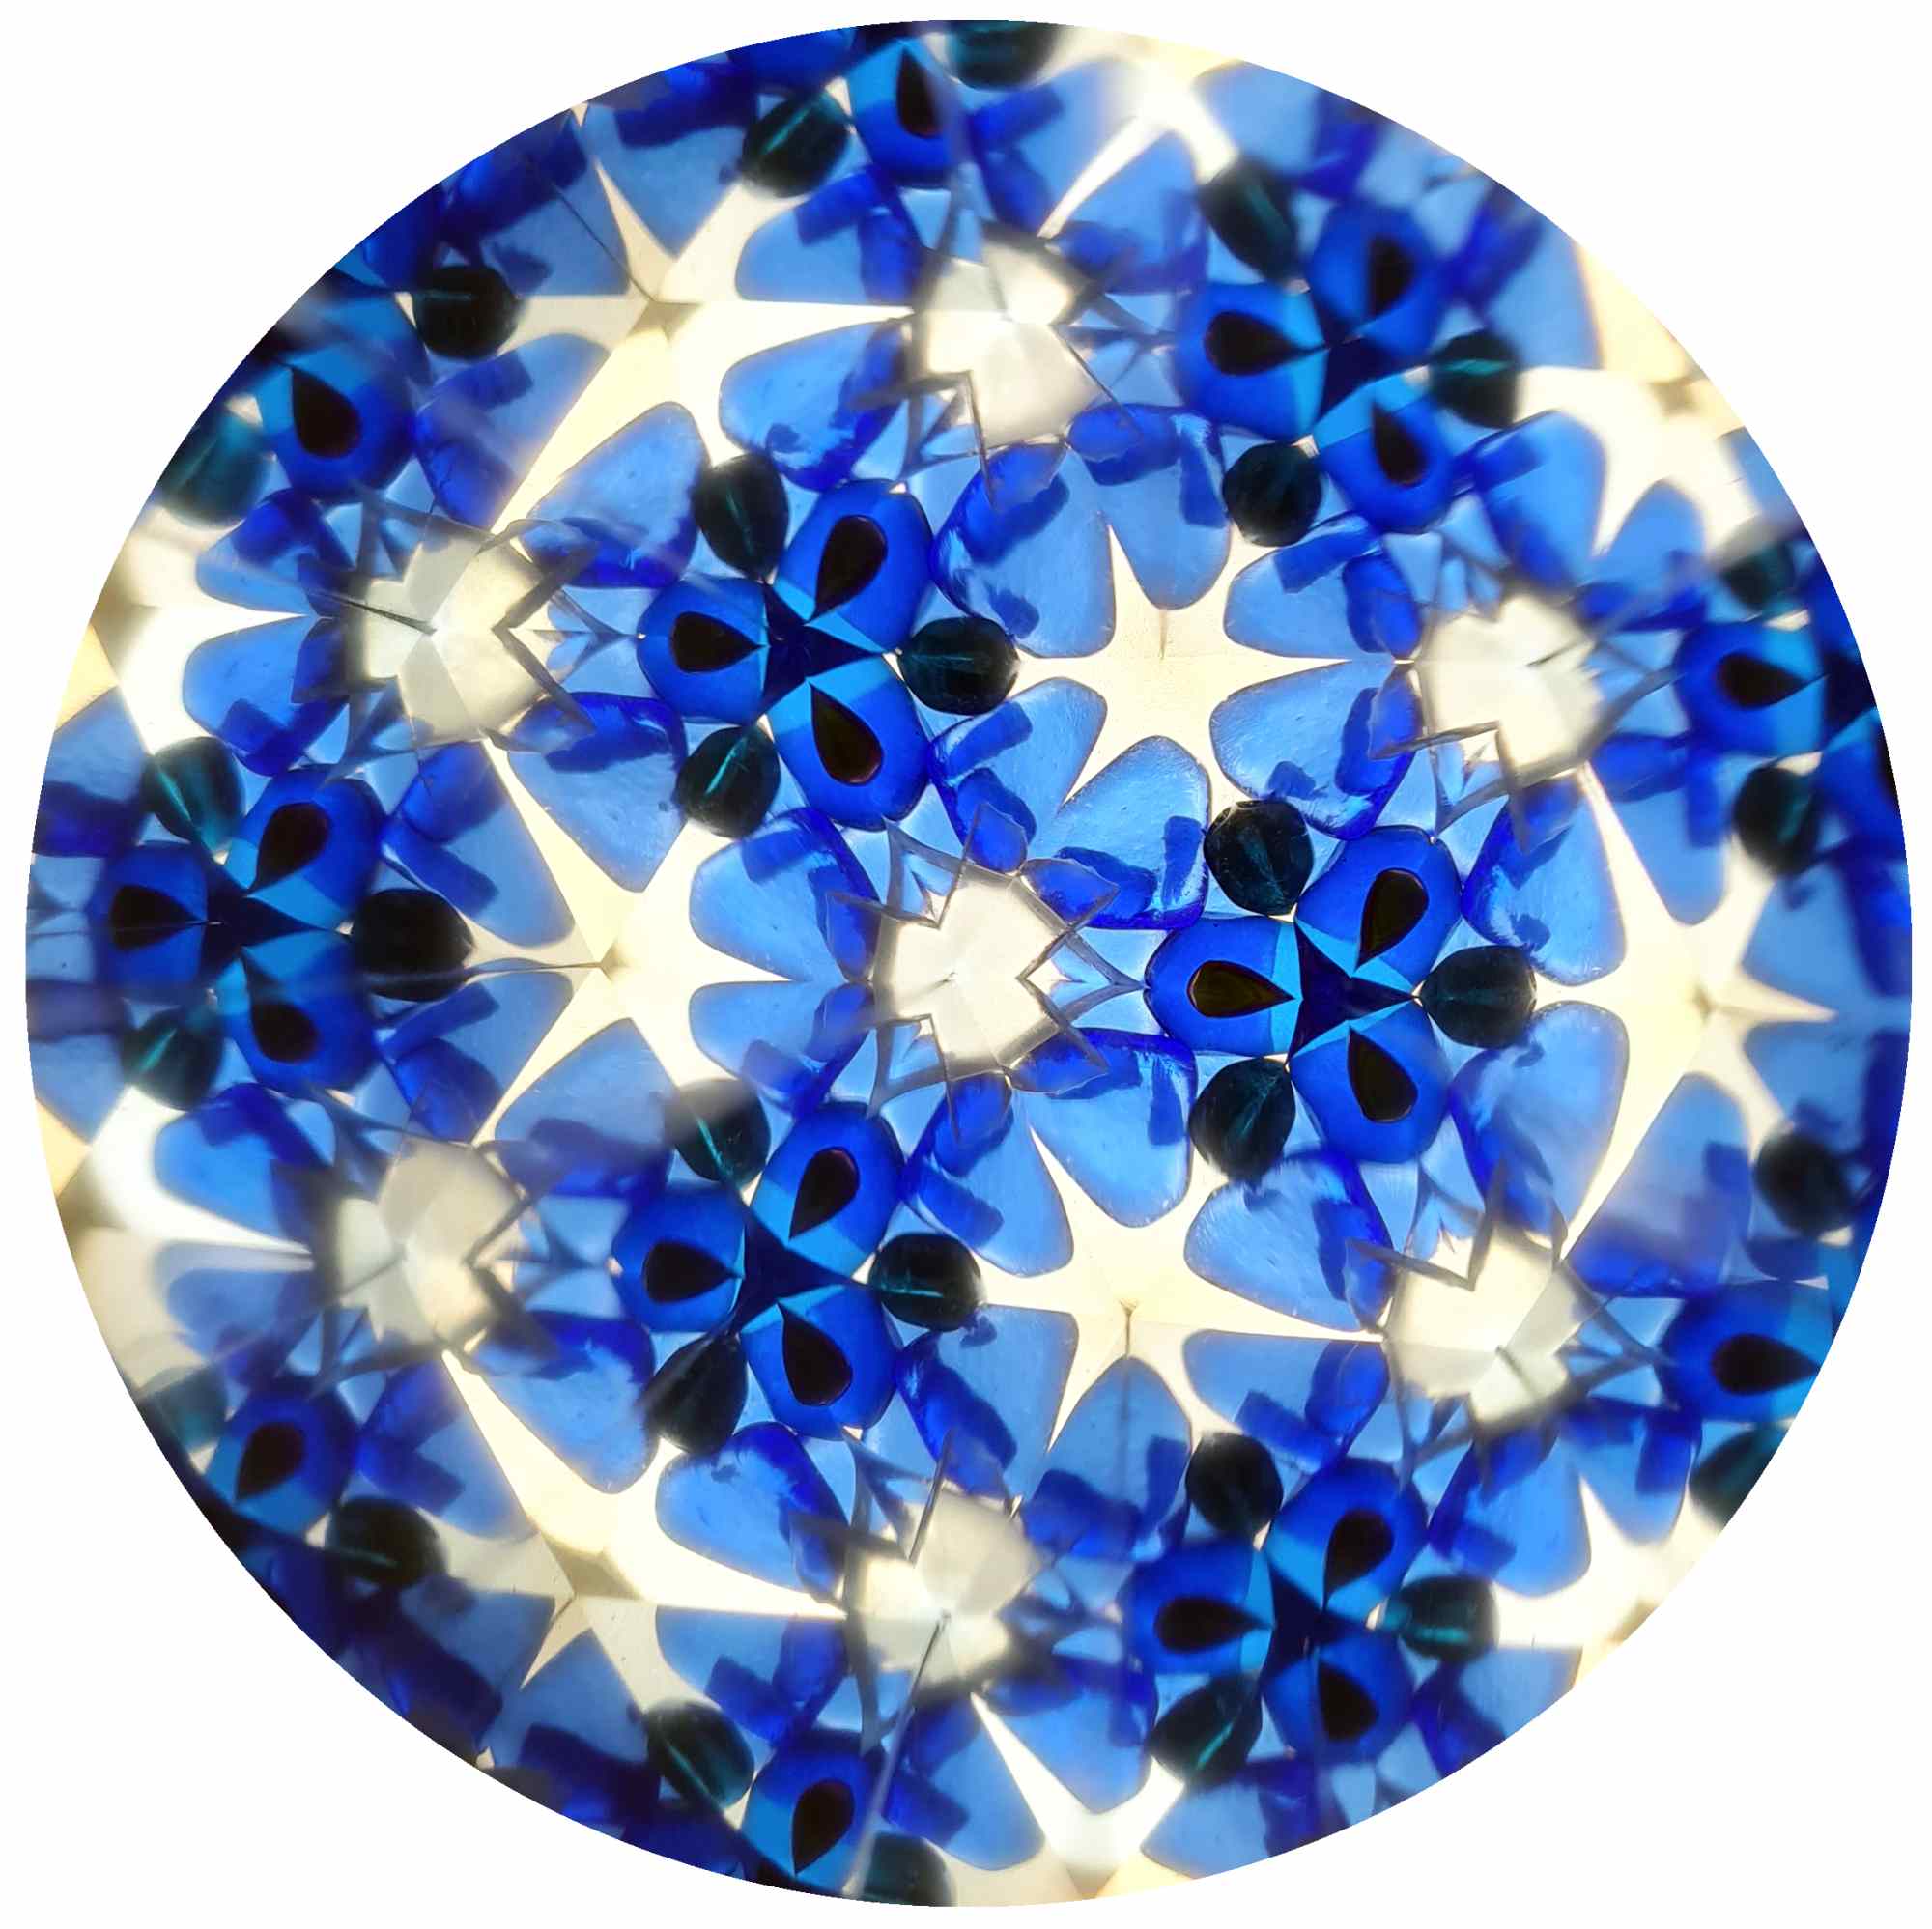 Kaleidoskop "Blaue Träume"